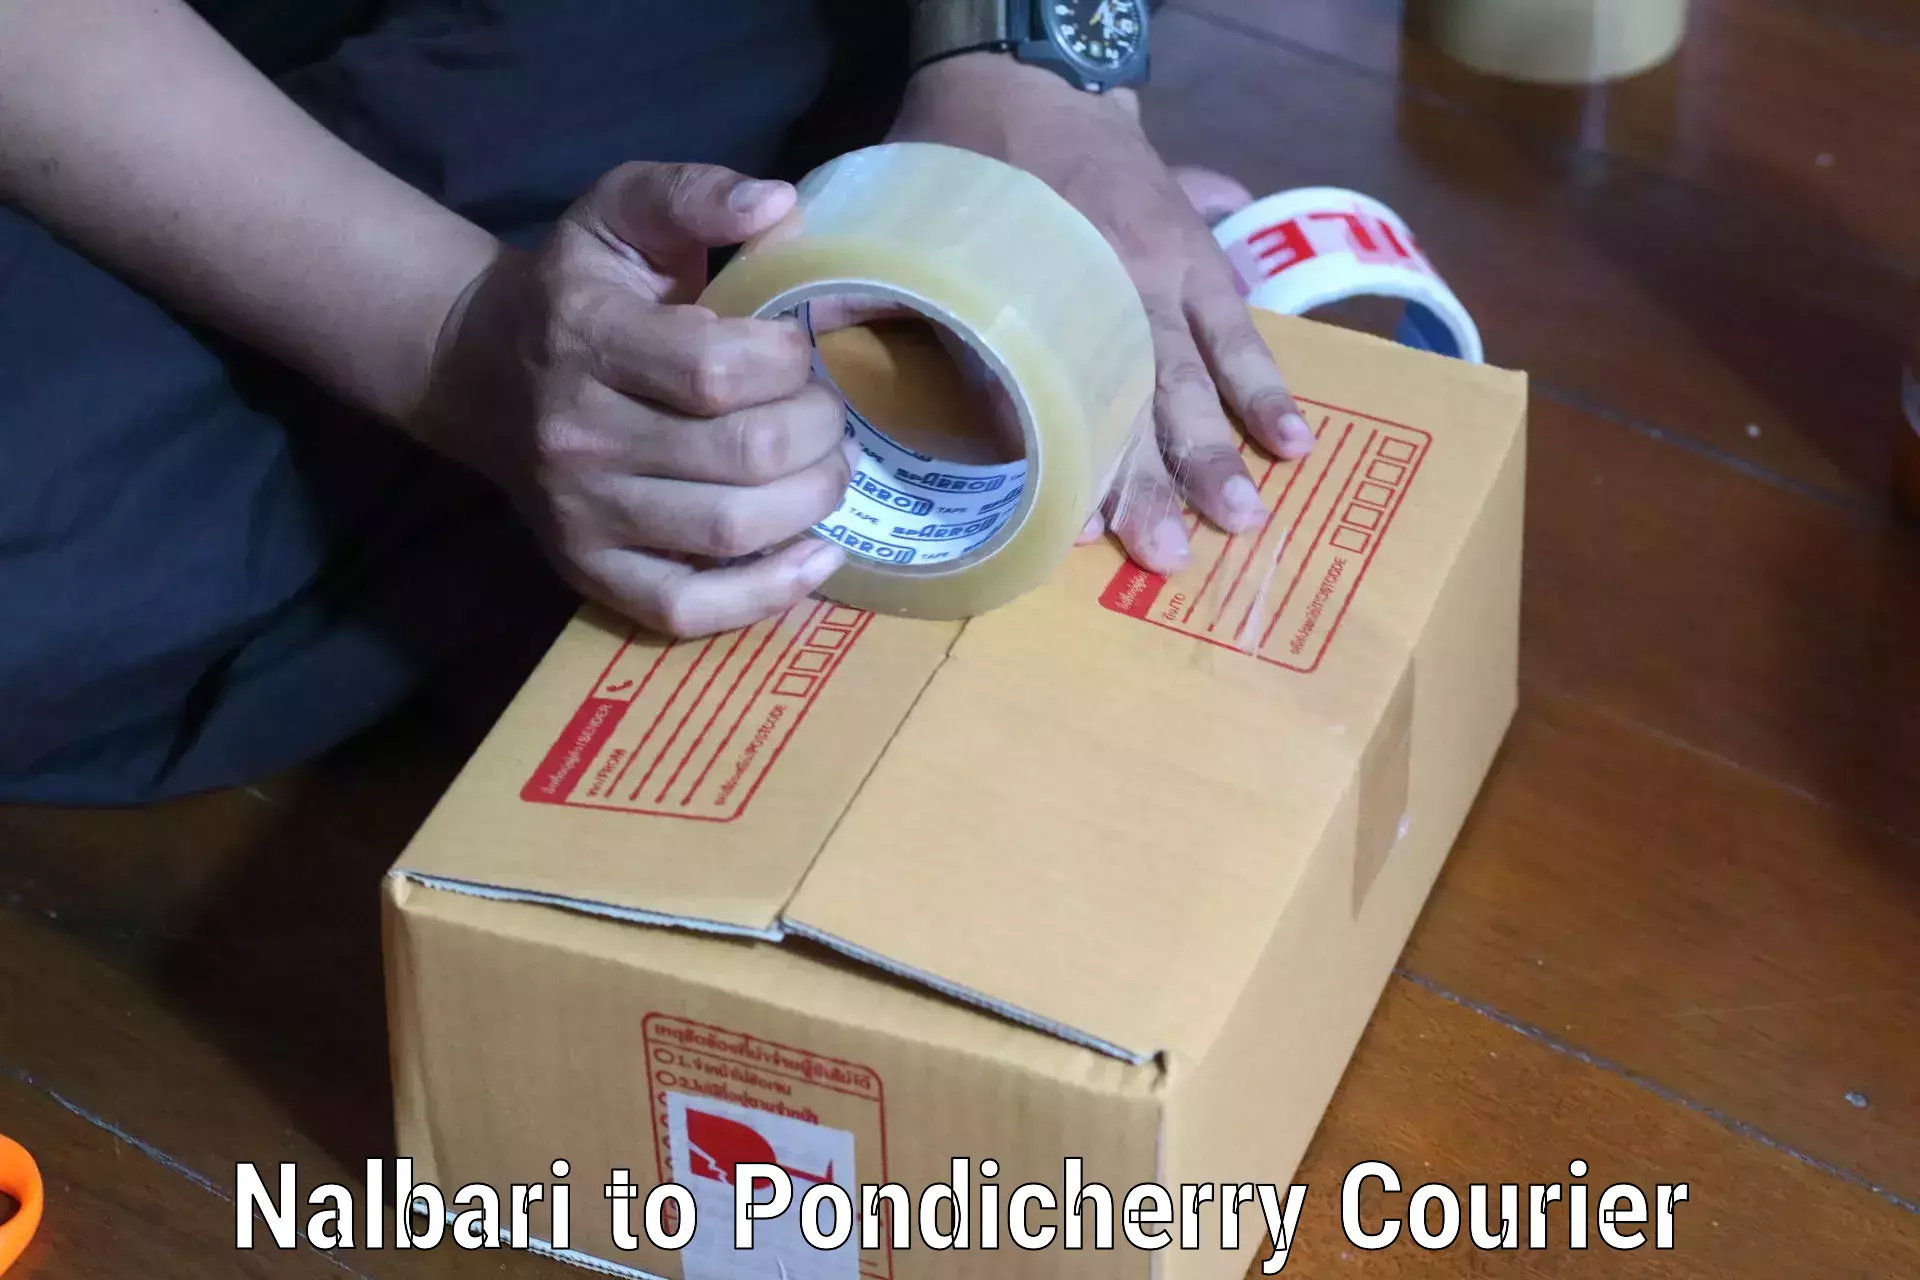 User-friendly delivery service Nalbari to Pondicherry